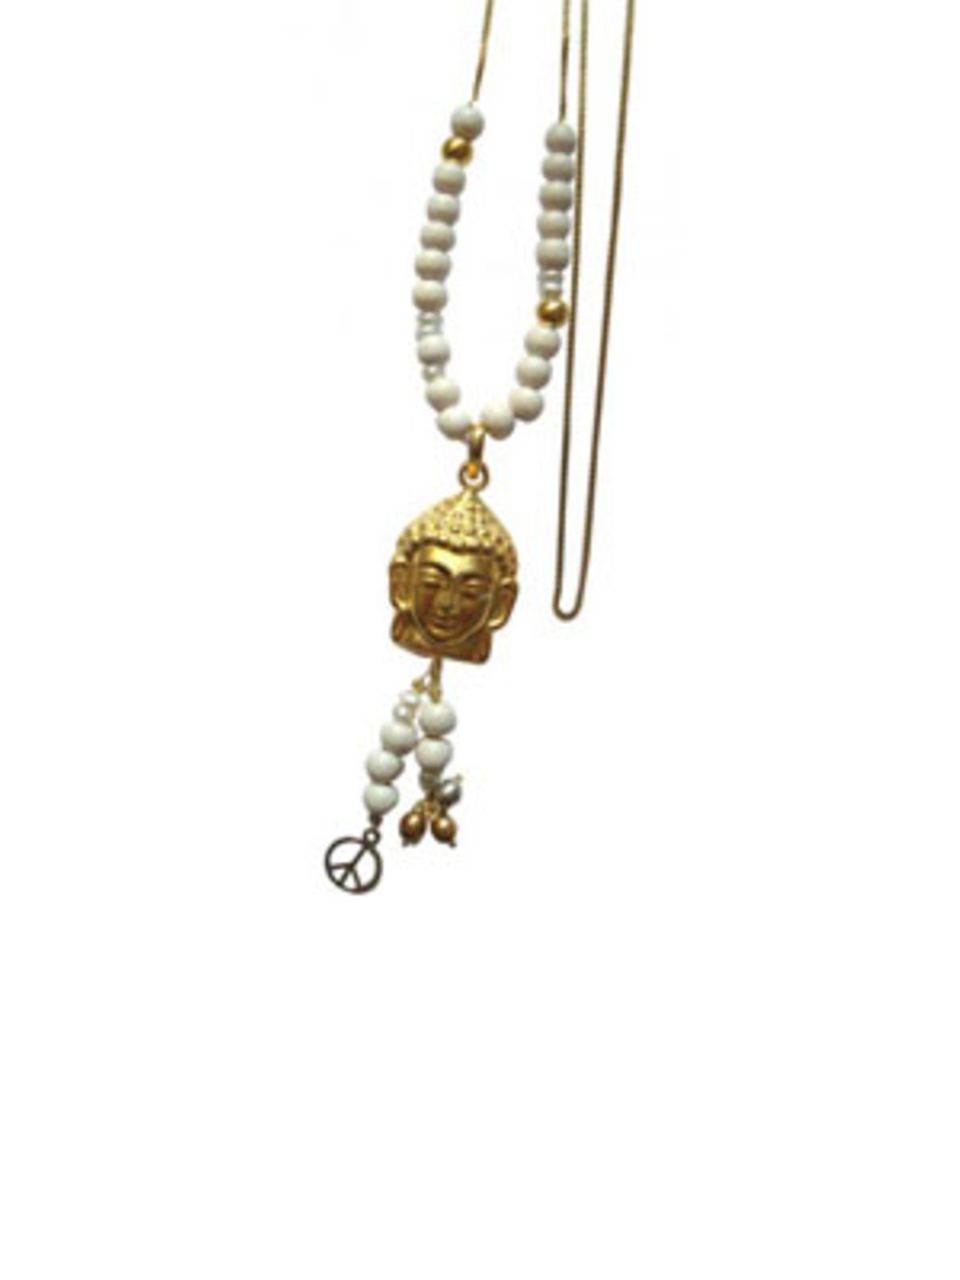 Friedvolle Perlenkette mit Buddha-Kopf von Daily Obsessions, um 110 Euro. Über www.dailyobsessions.com.